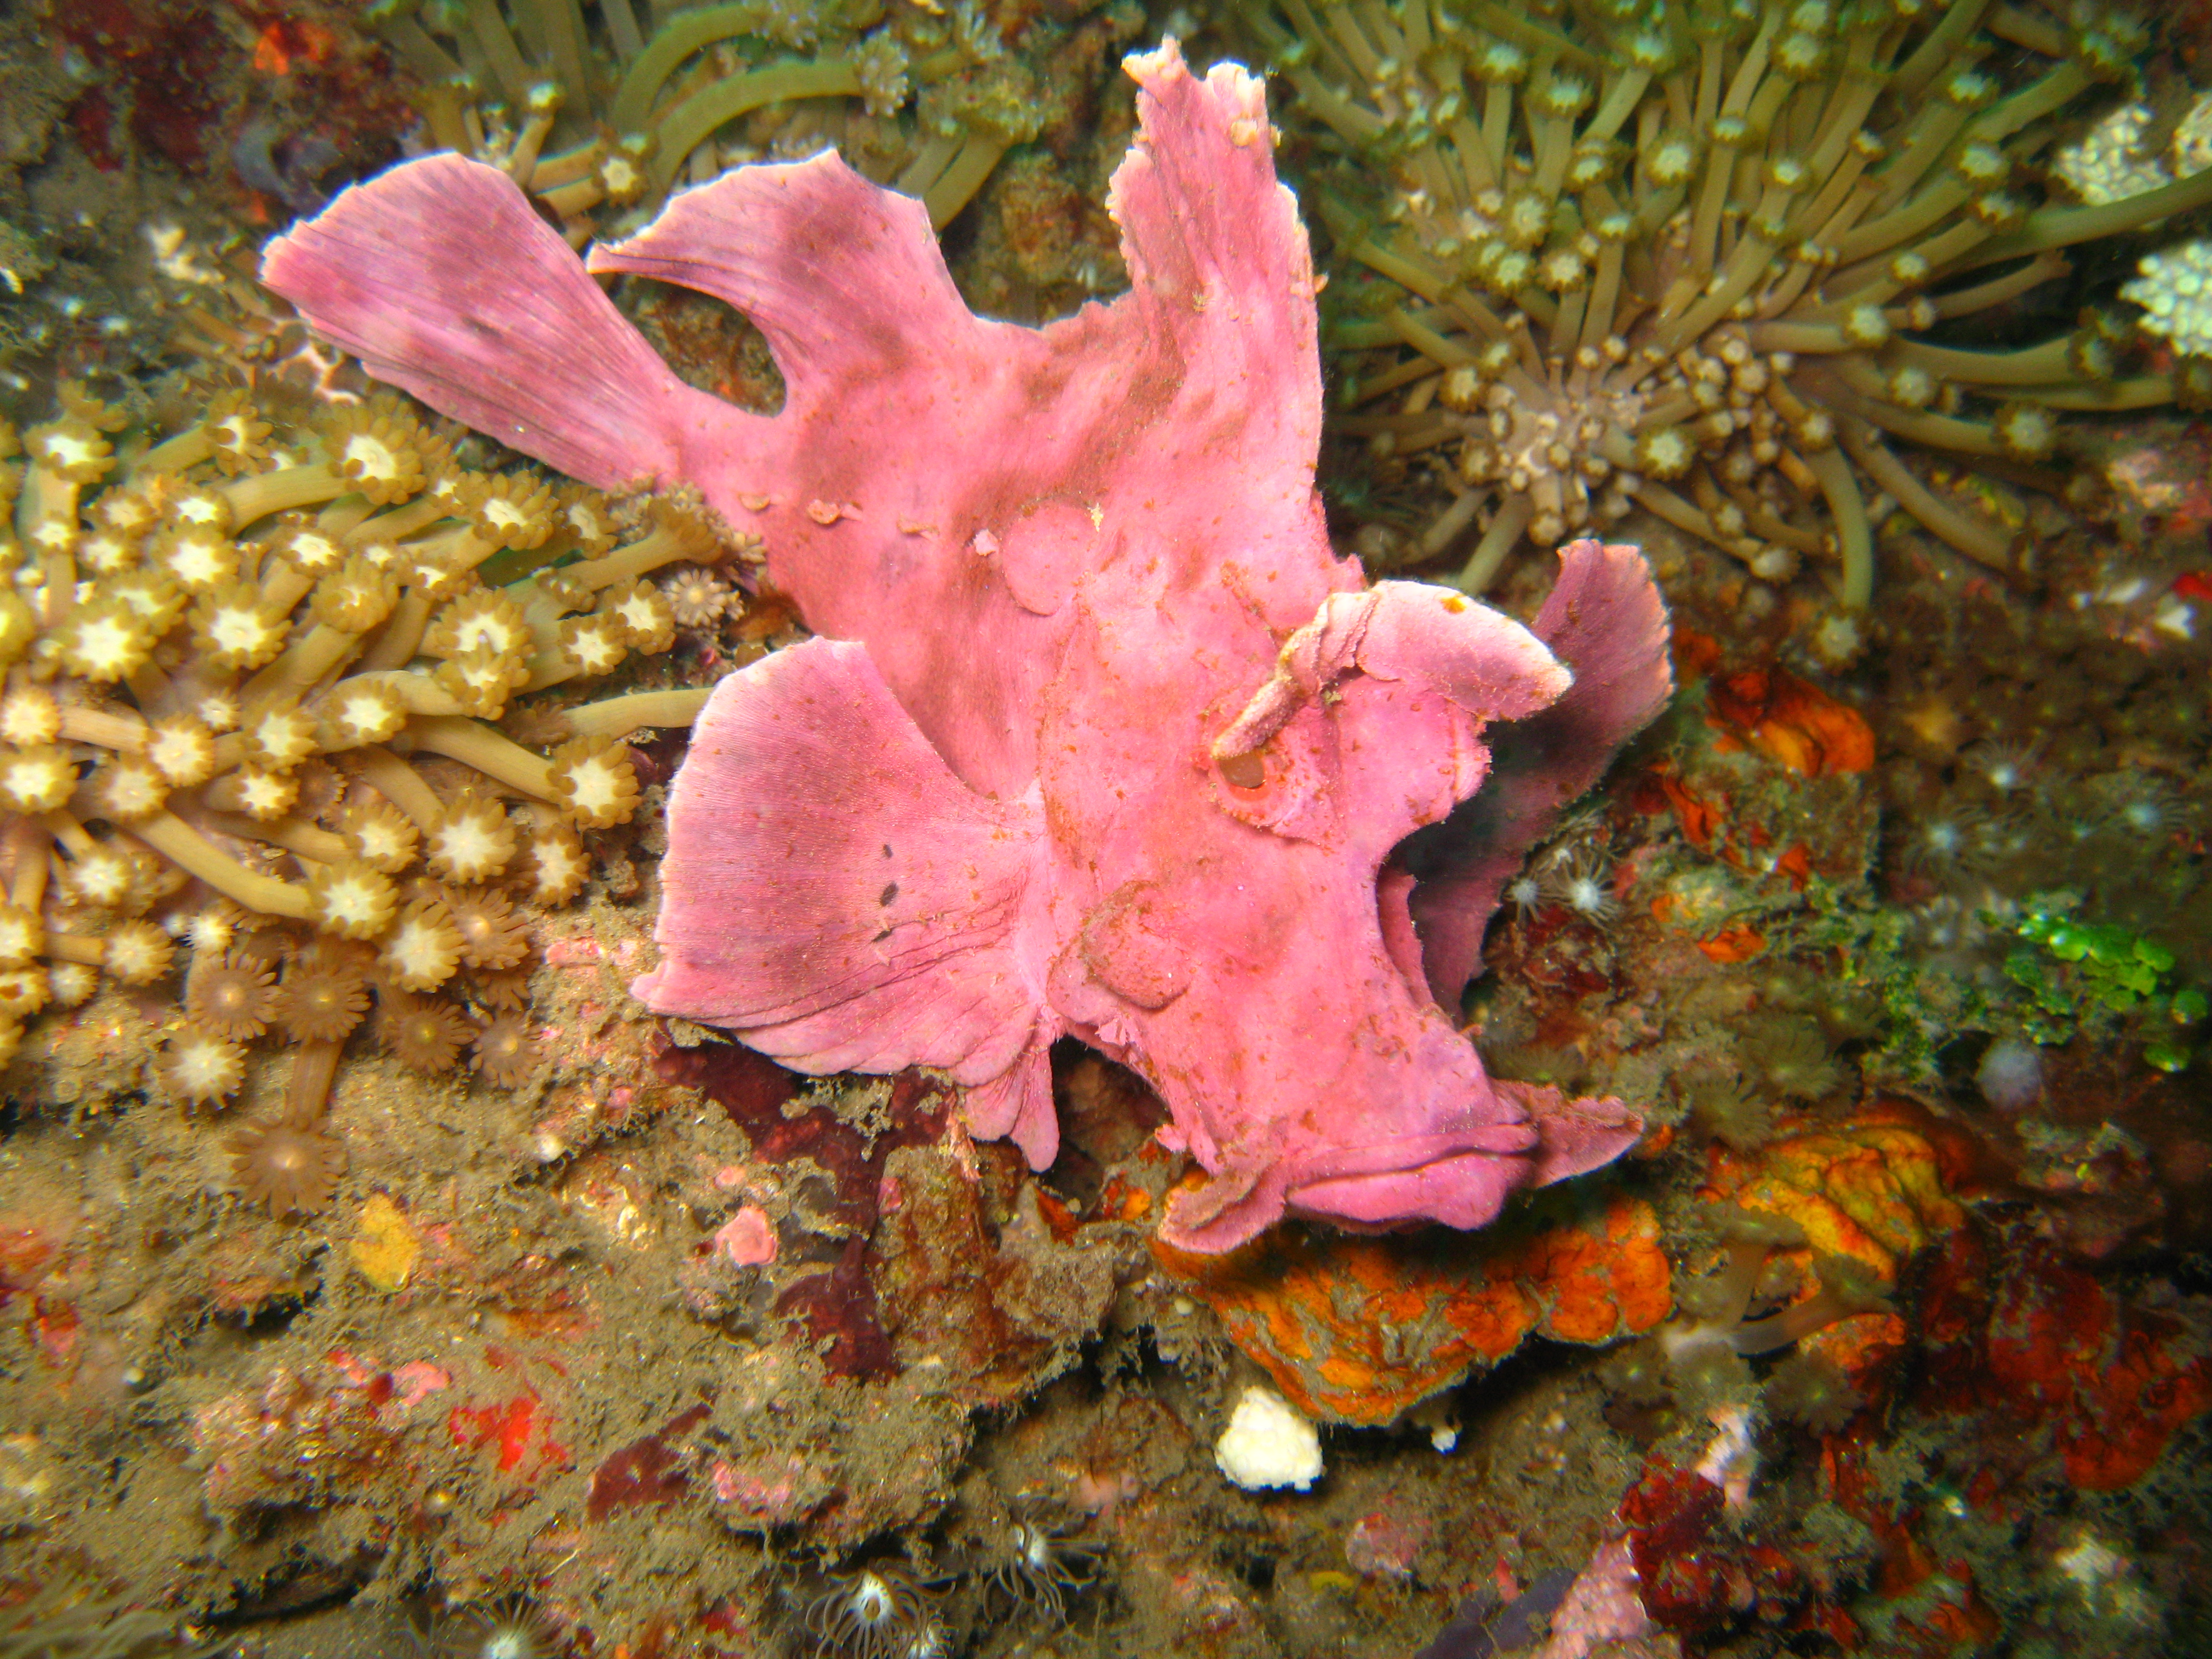 Weedy scorpionfish, minimal appendages lavender